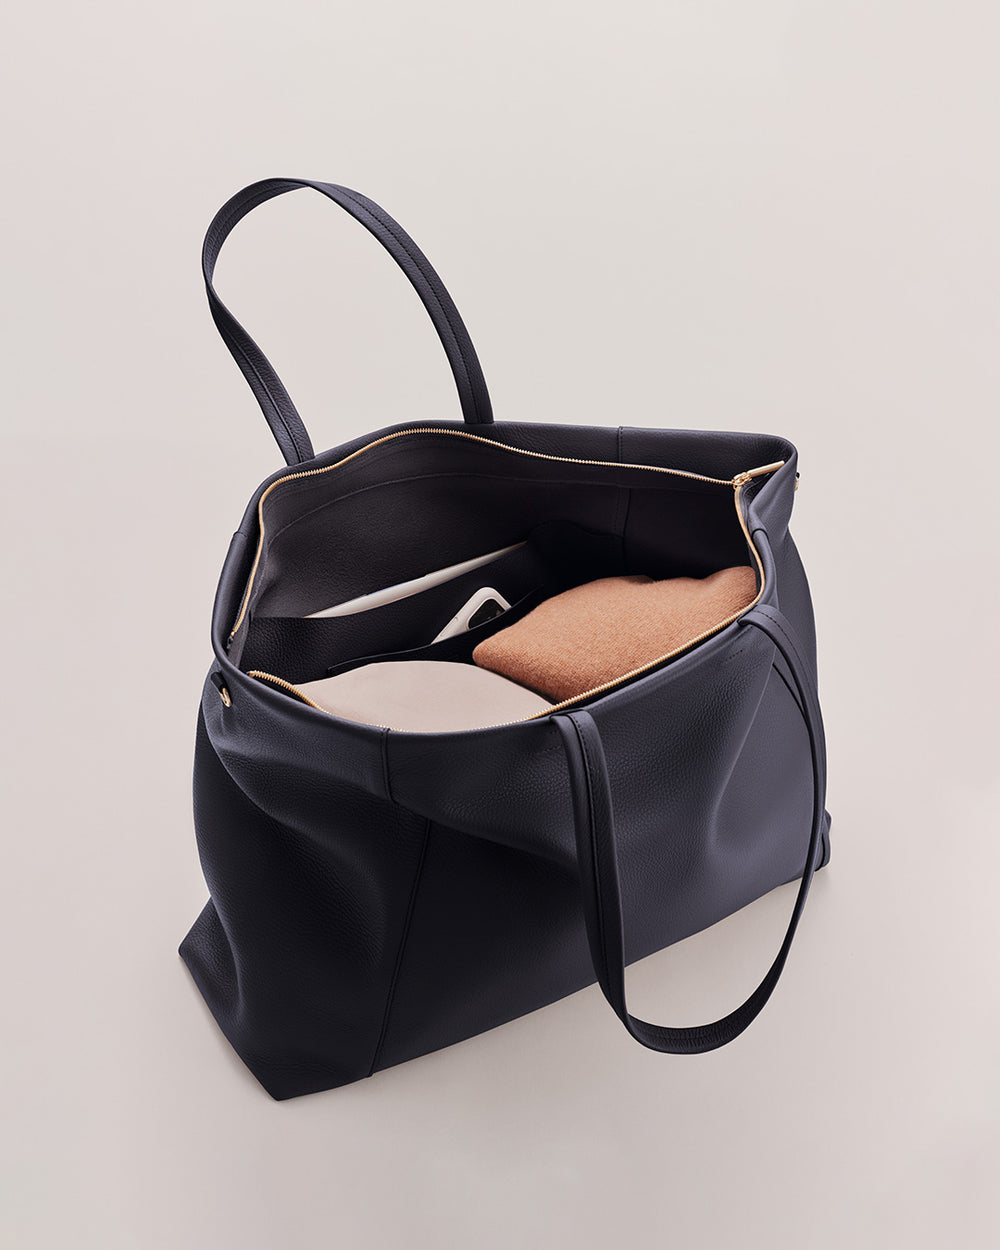 Open handbag with a single shoe inside, against a plain background.